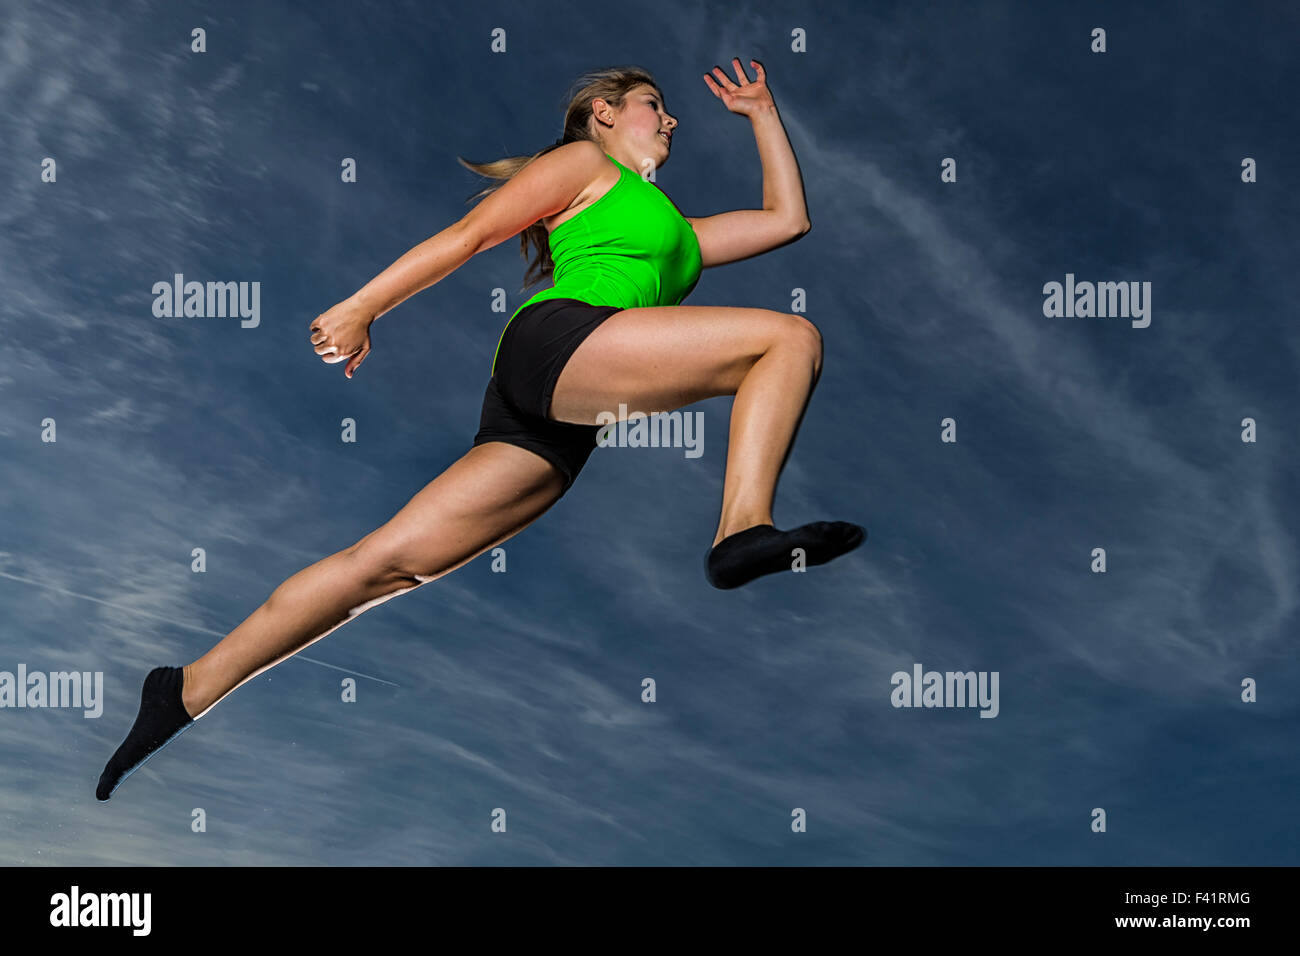 Junge Frau, 18 Jahre alt, springen, gegen den Abendhimmel Stockfoto